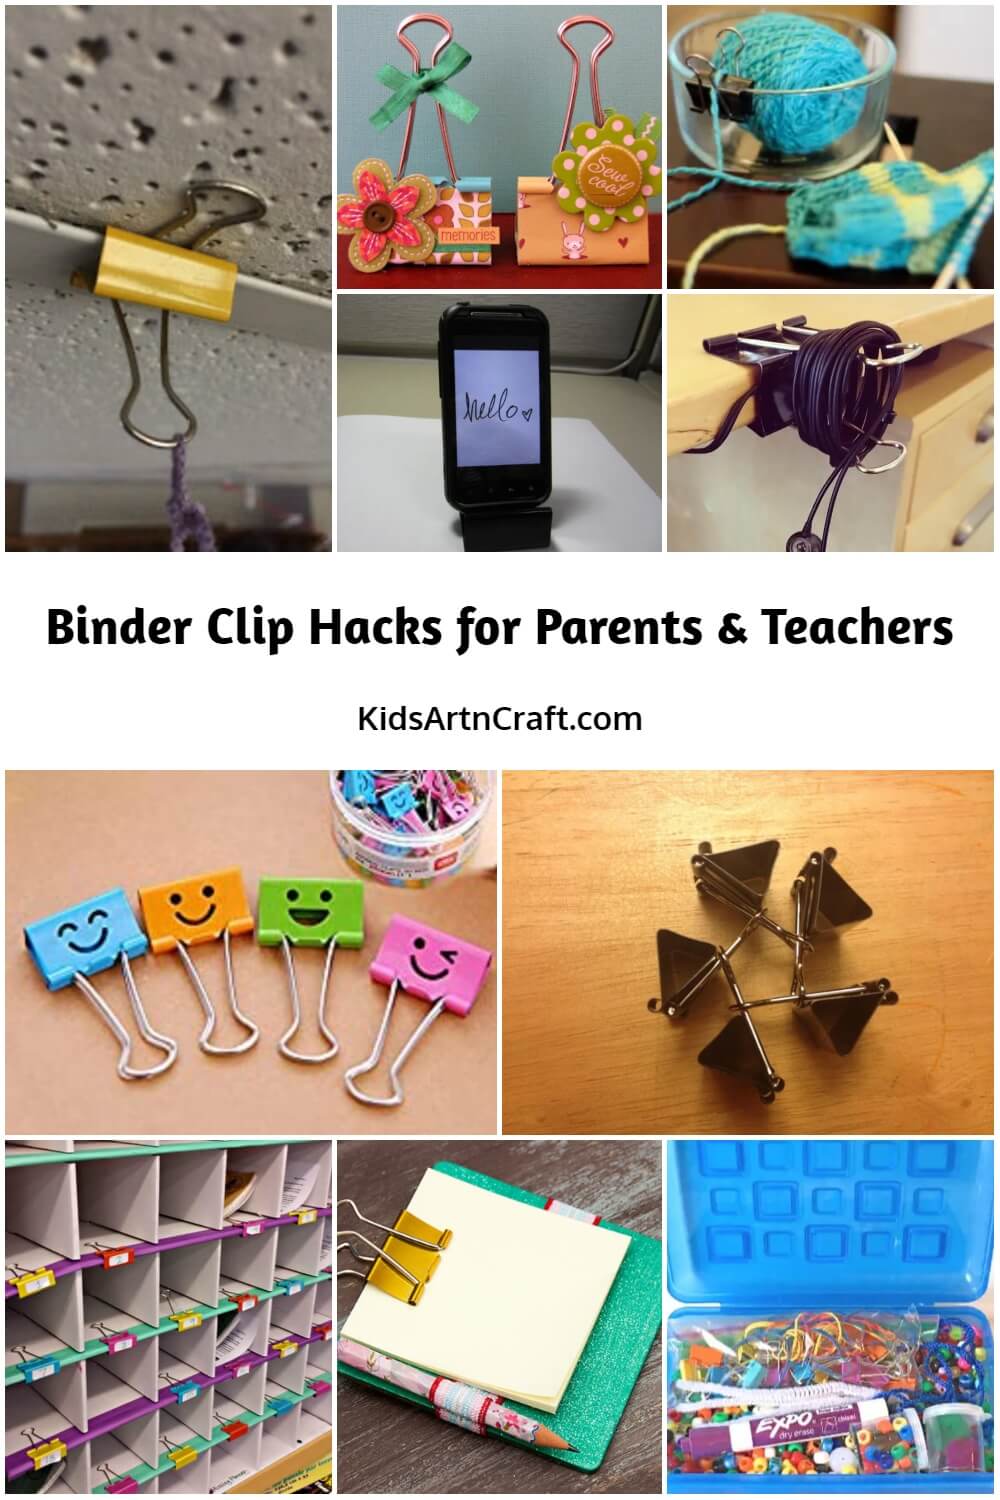 Binder Clip Hacks for Parents & Teachers